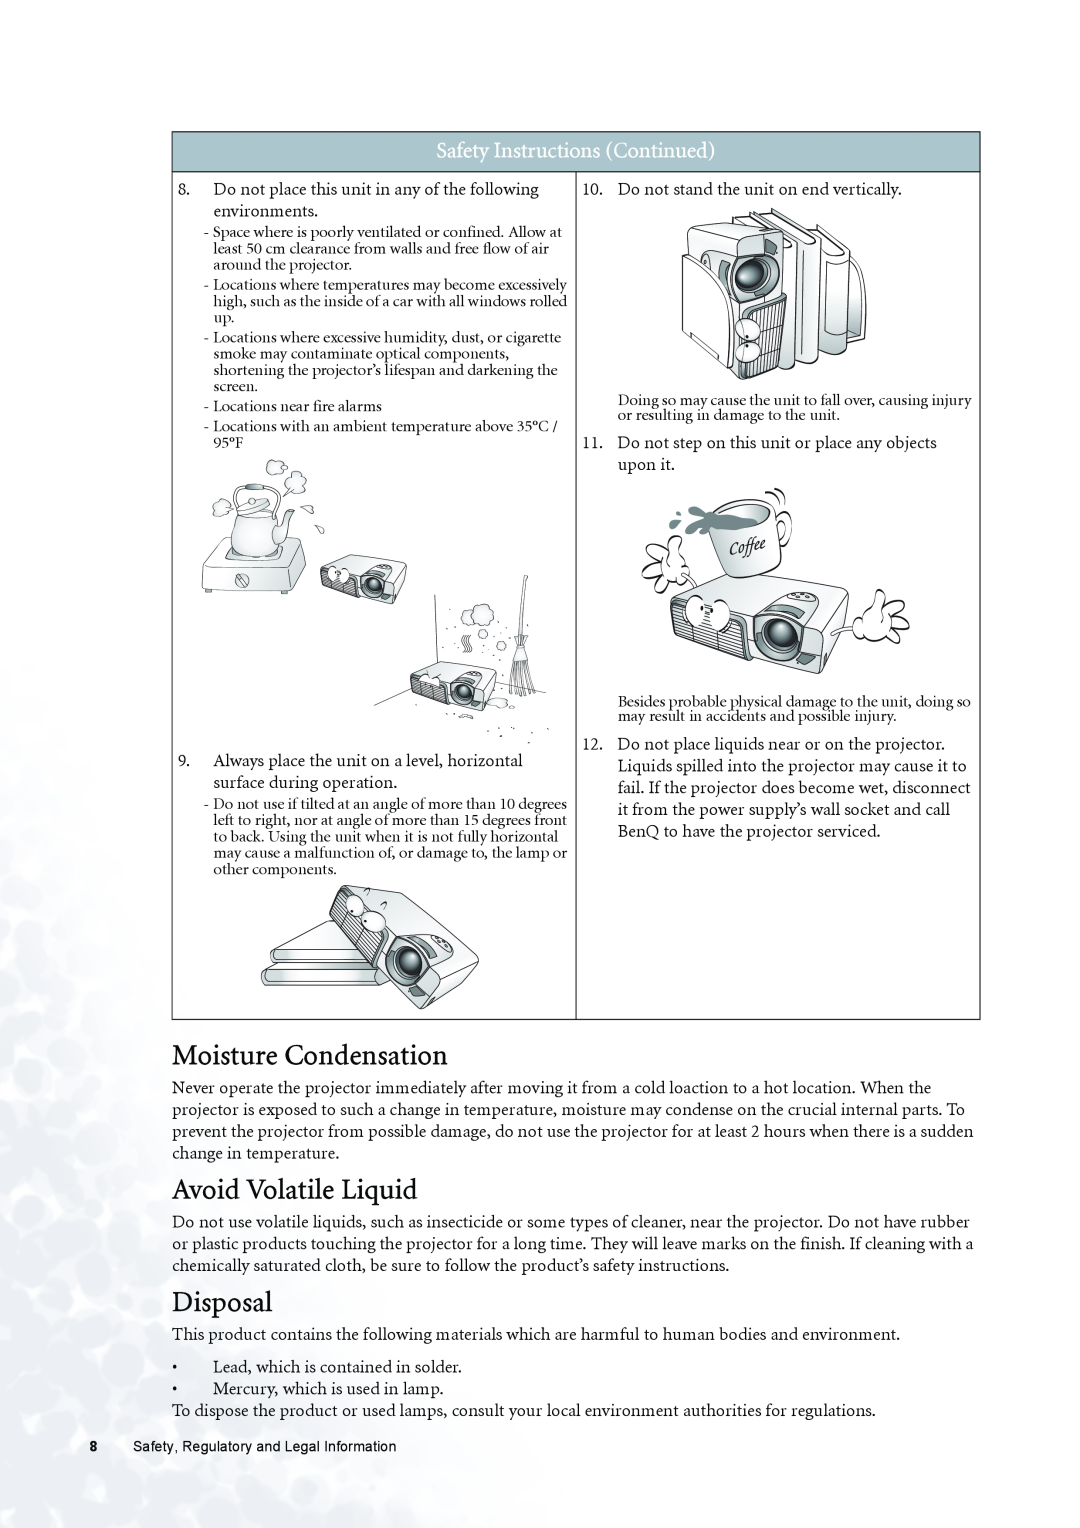 BenQ PE6800 user manual Moisture Condensation, Avoid Volatile Liquid, Disposal, Safety Instructions Continued 